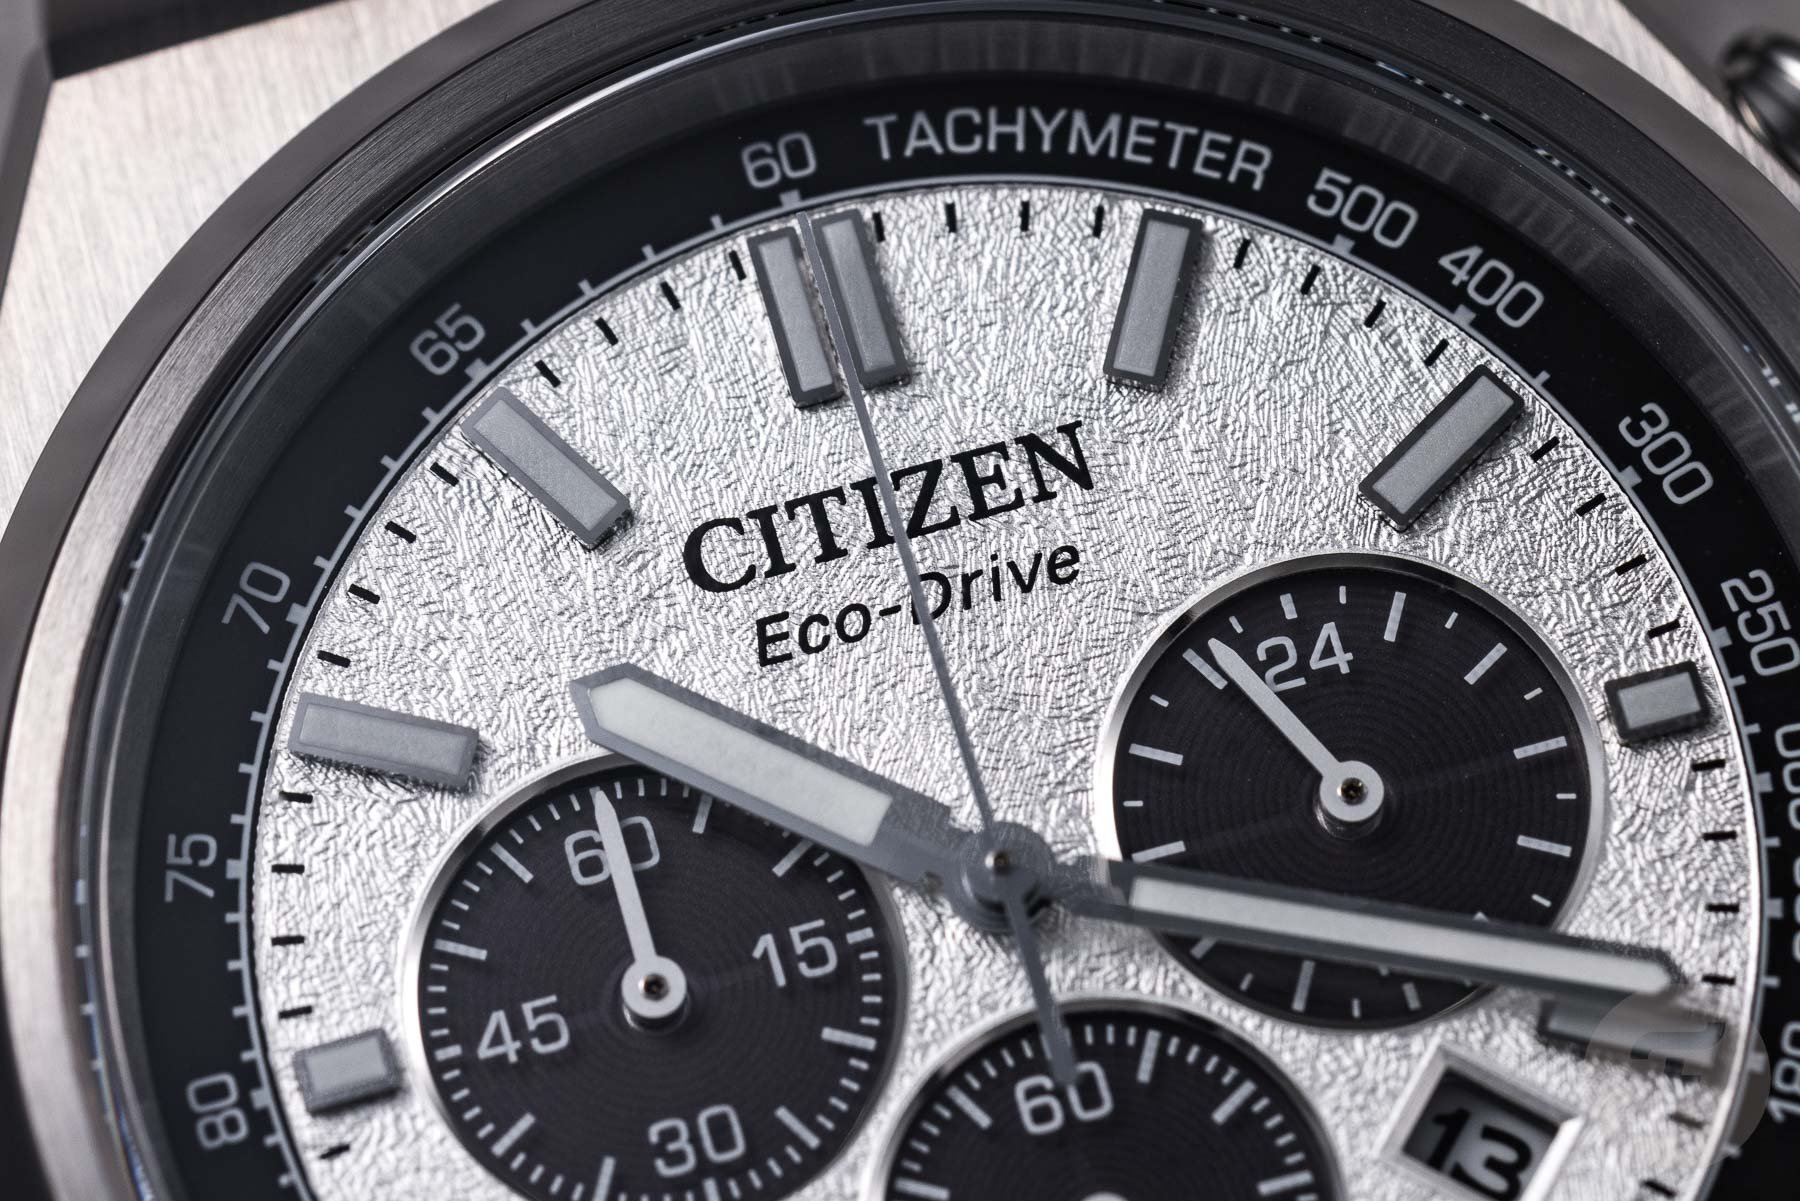 Citizen Super Titanium Eco-Drive Chrono panda close-up